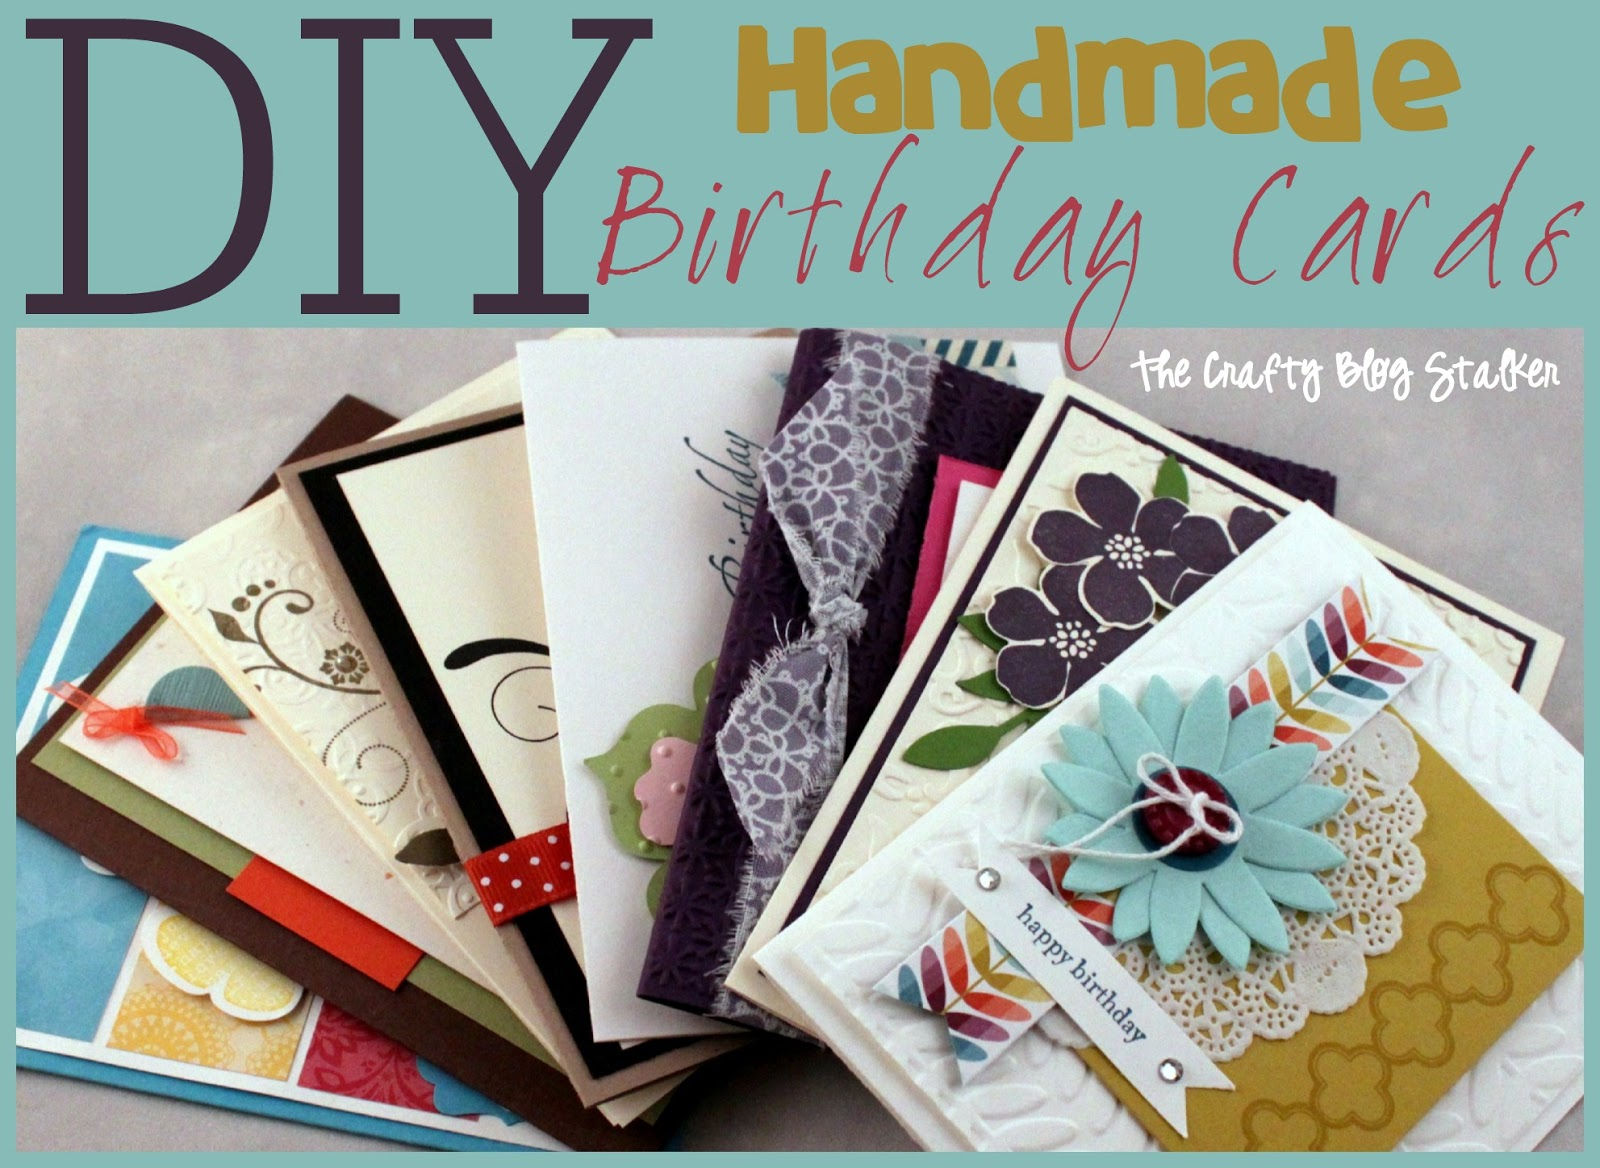 Birthday Greeting Card Making Ideas Handmade Birthday Card Ideas The Crafty Blog Stalker